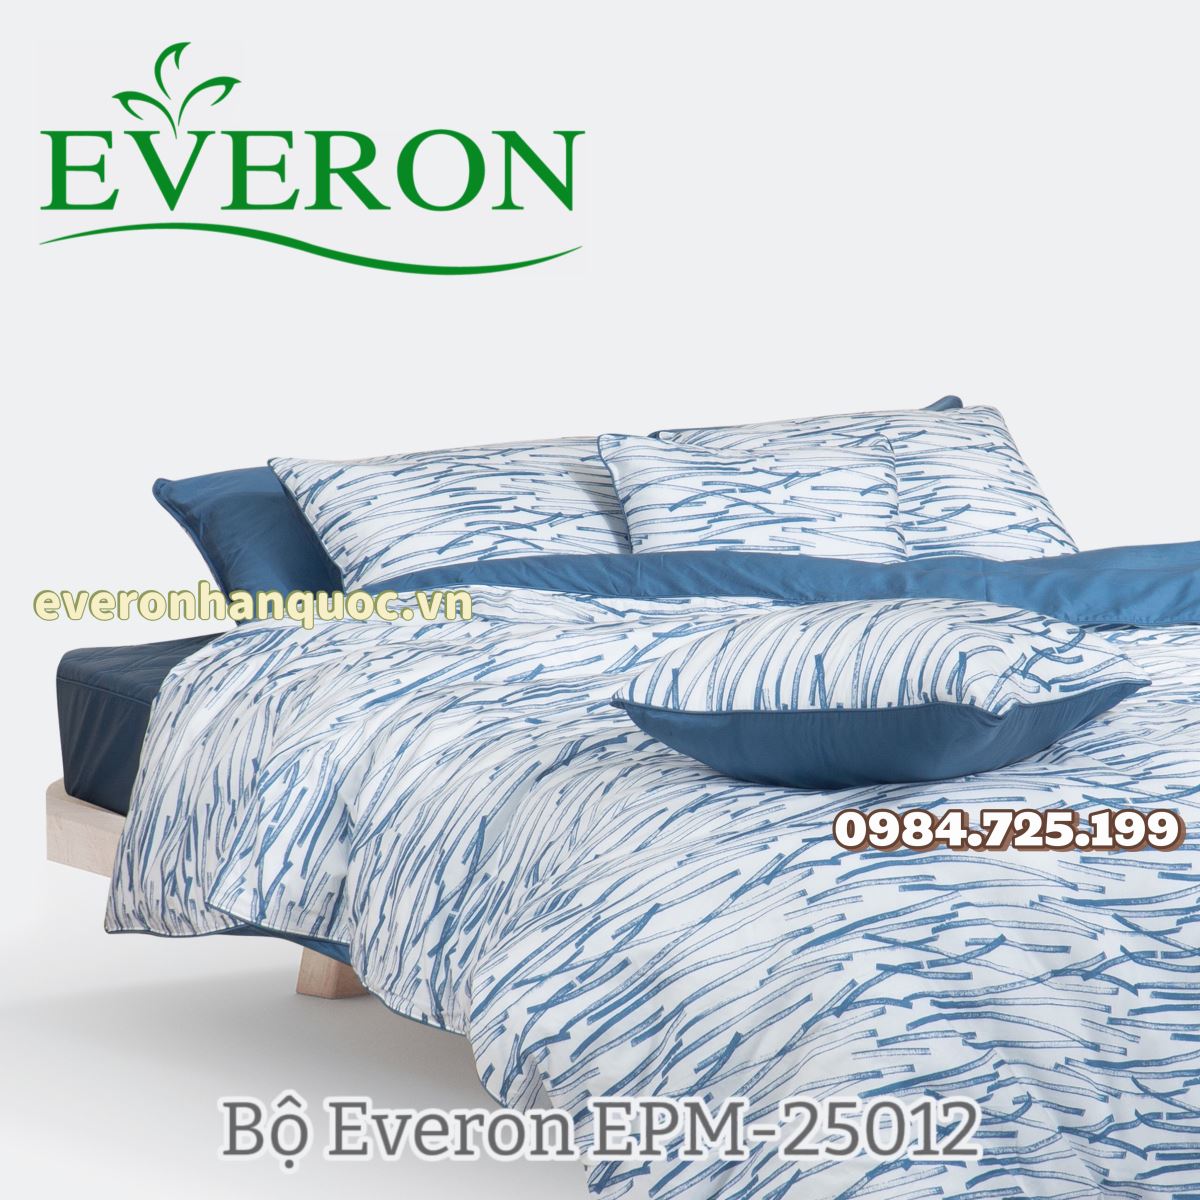 Bộ Everon EPM-25012